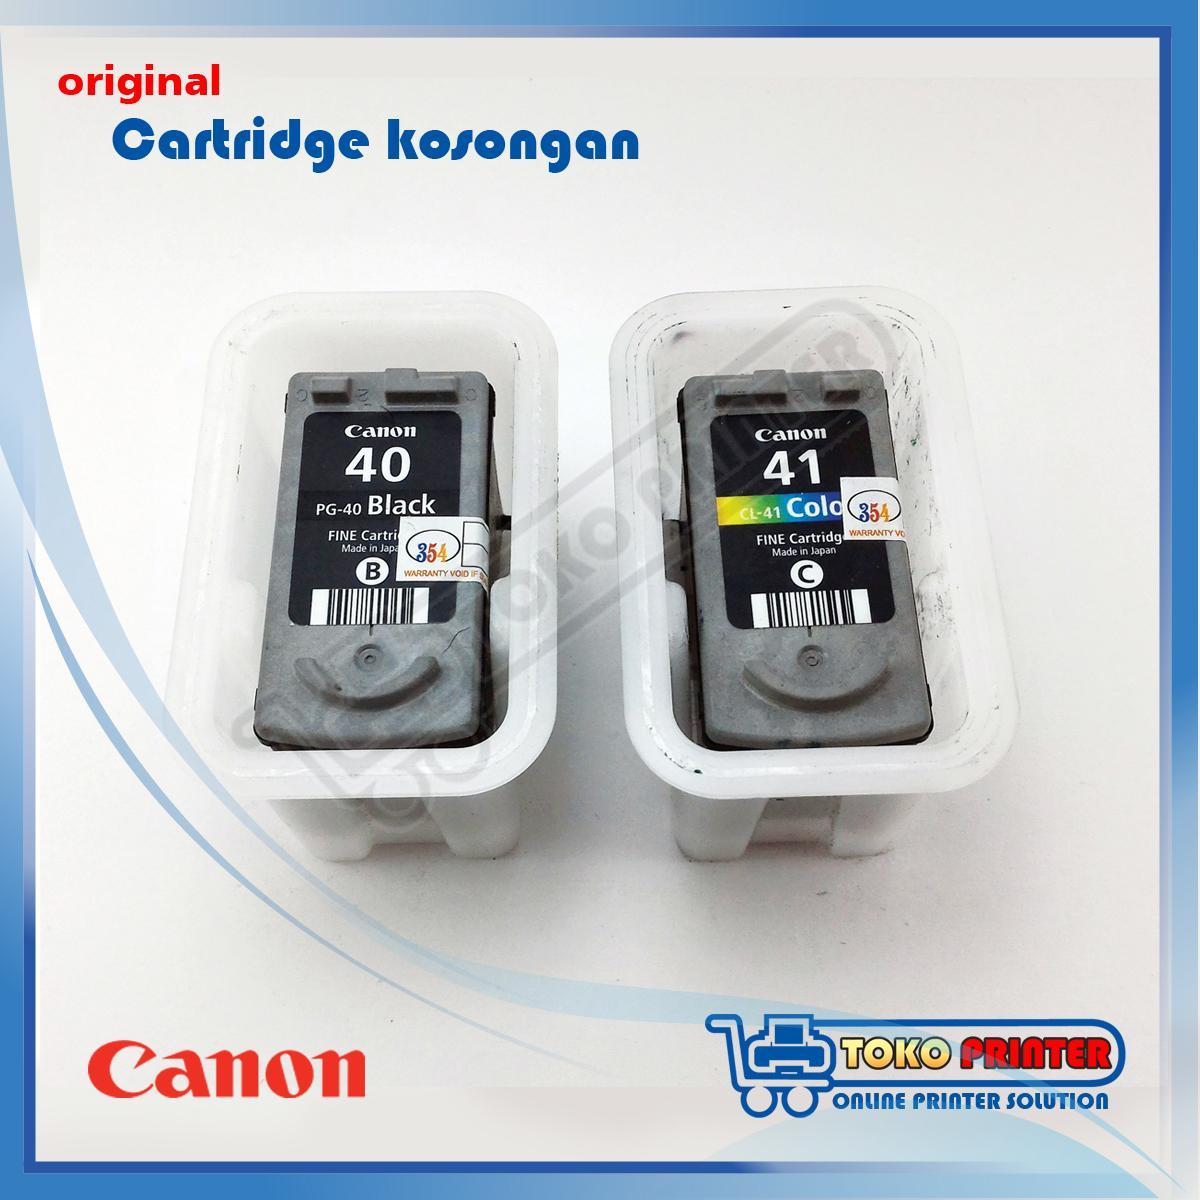 Cartridge Kosongan Canon PG-40 & CL-41